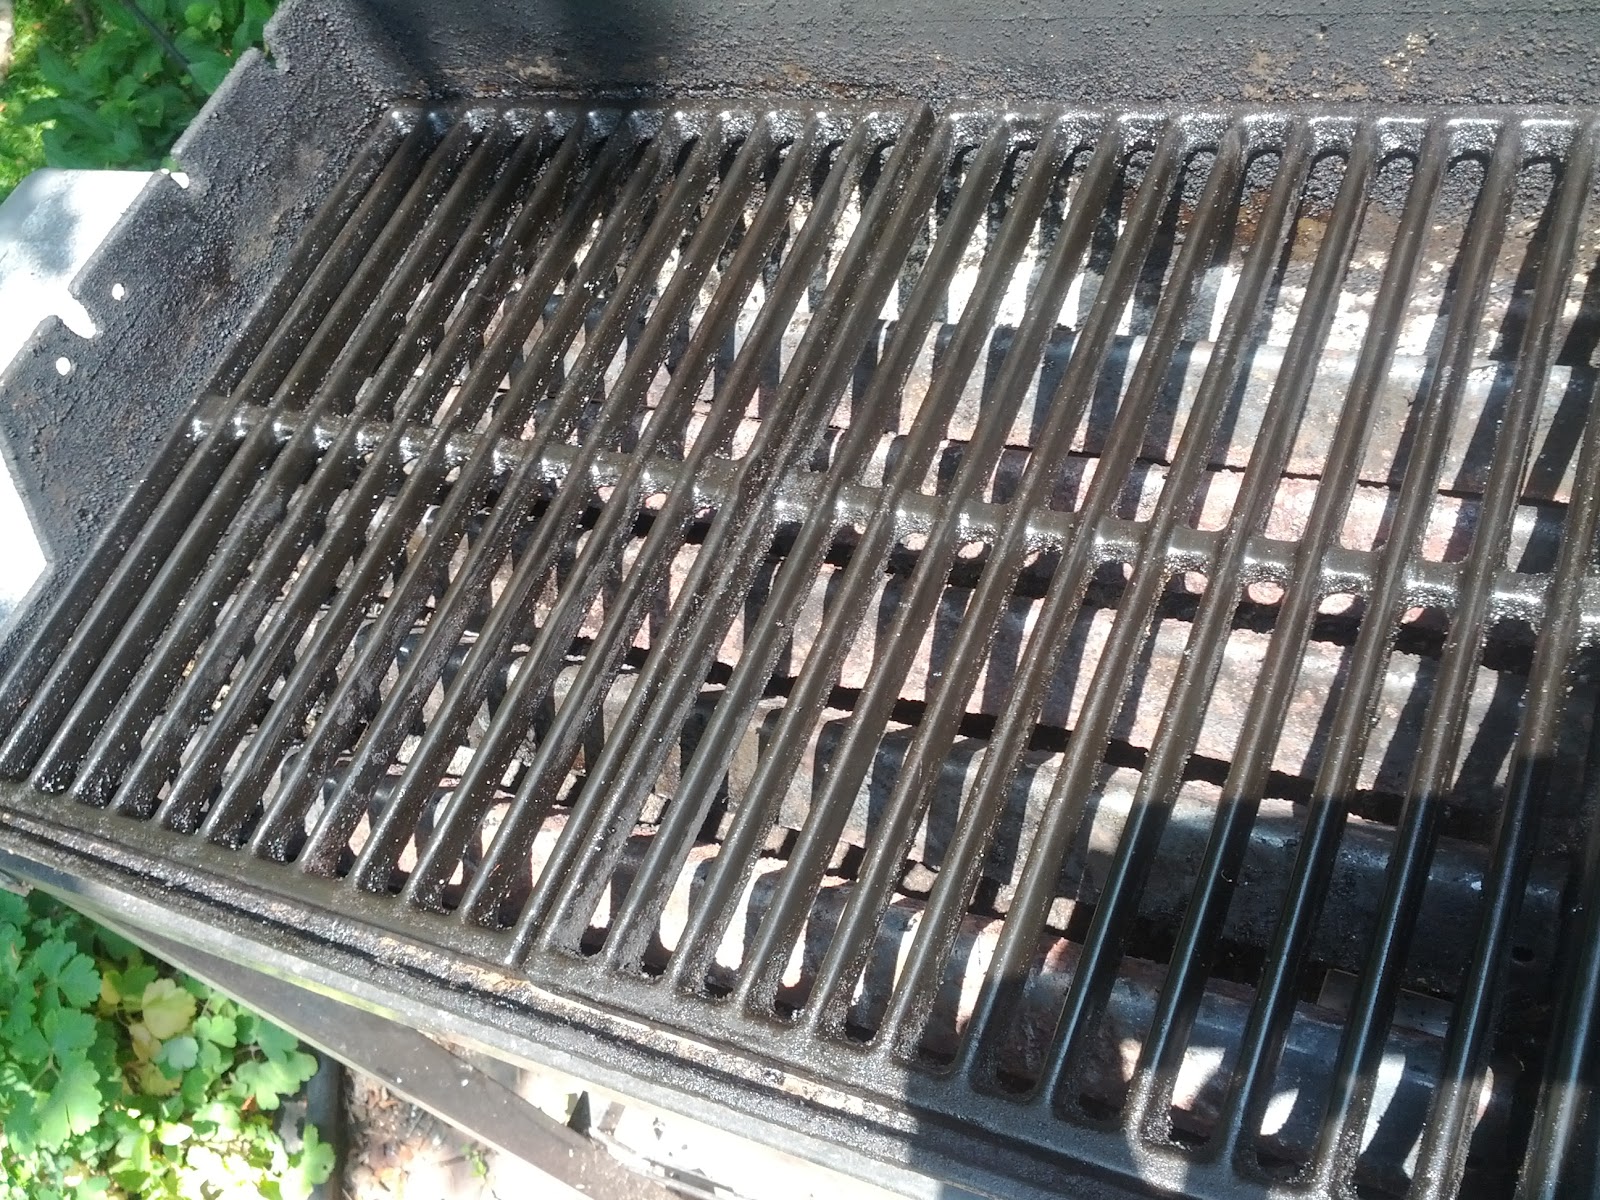 Weber grill problem